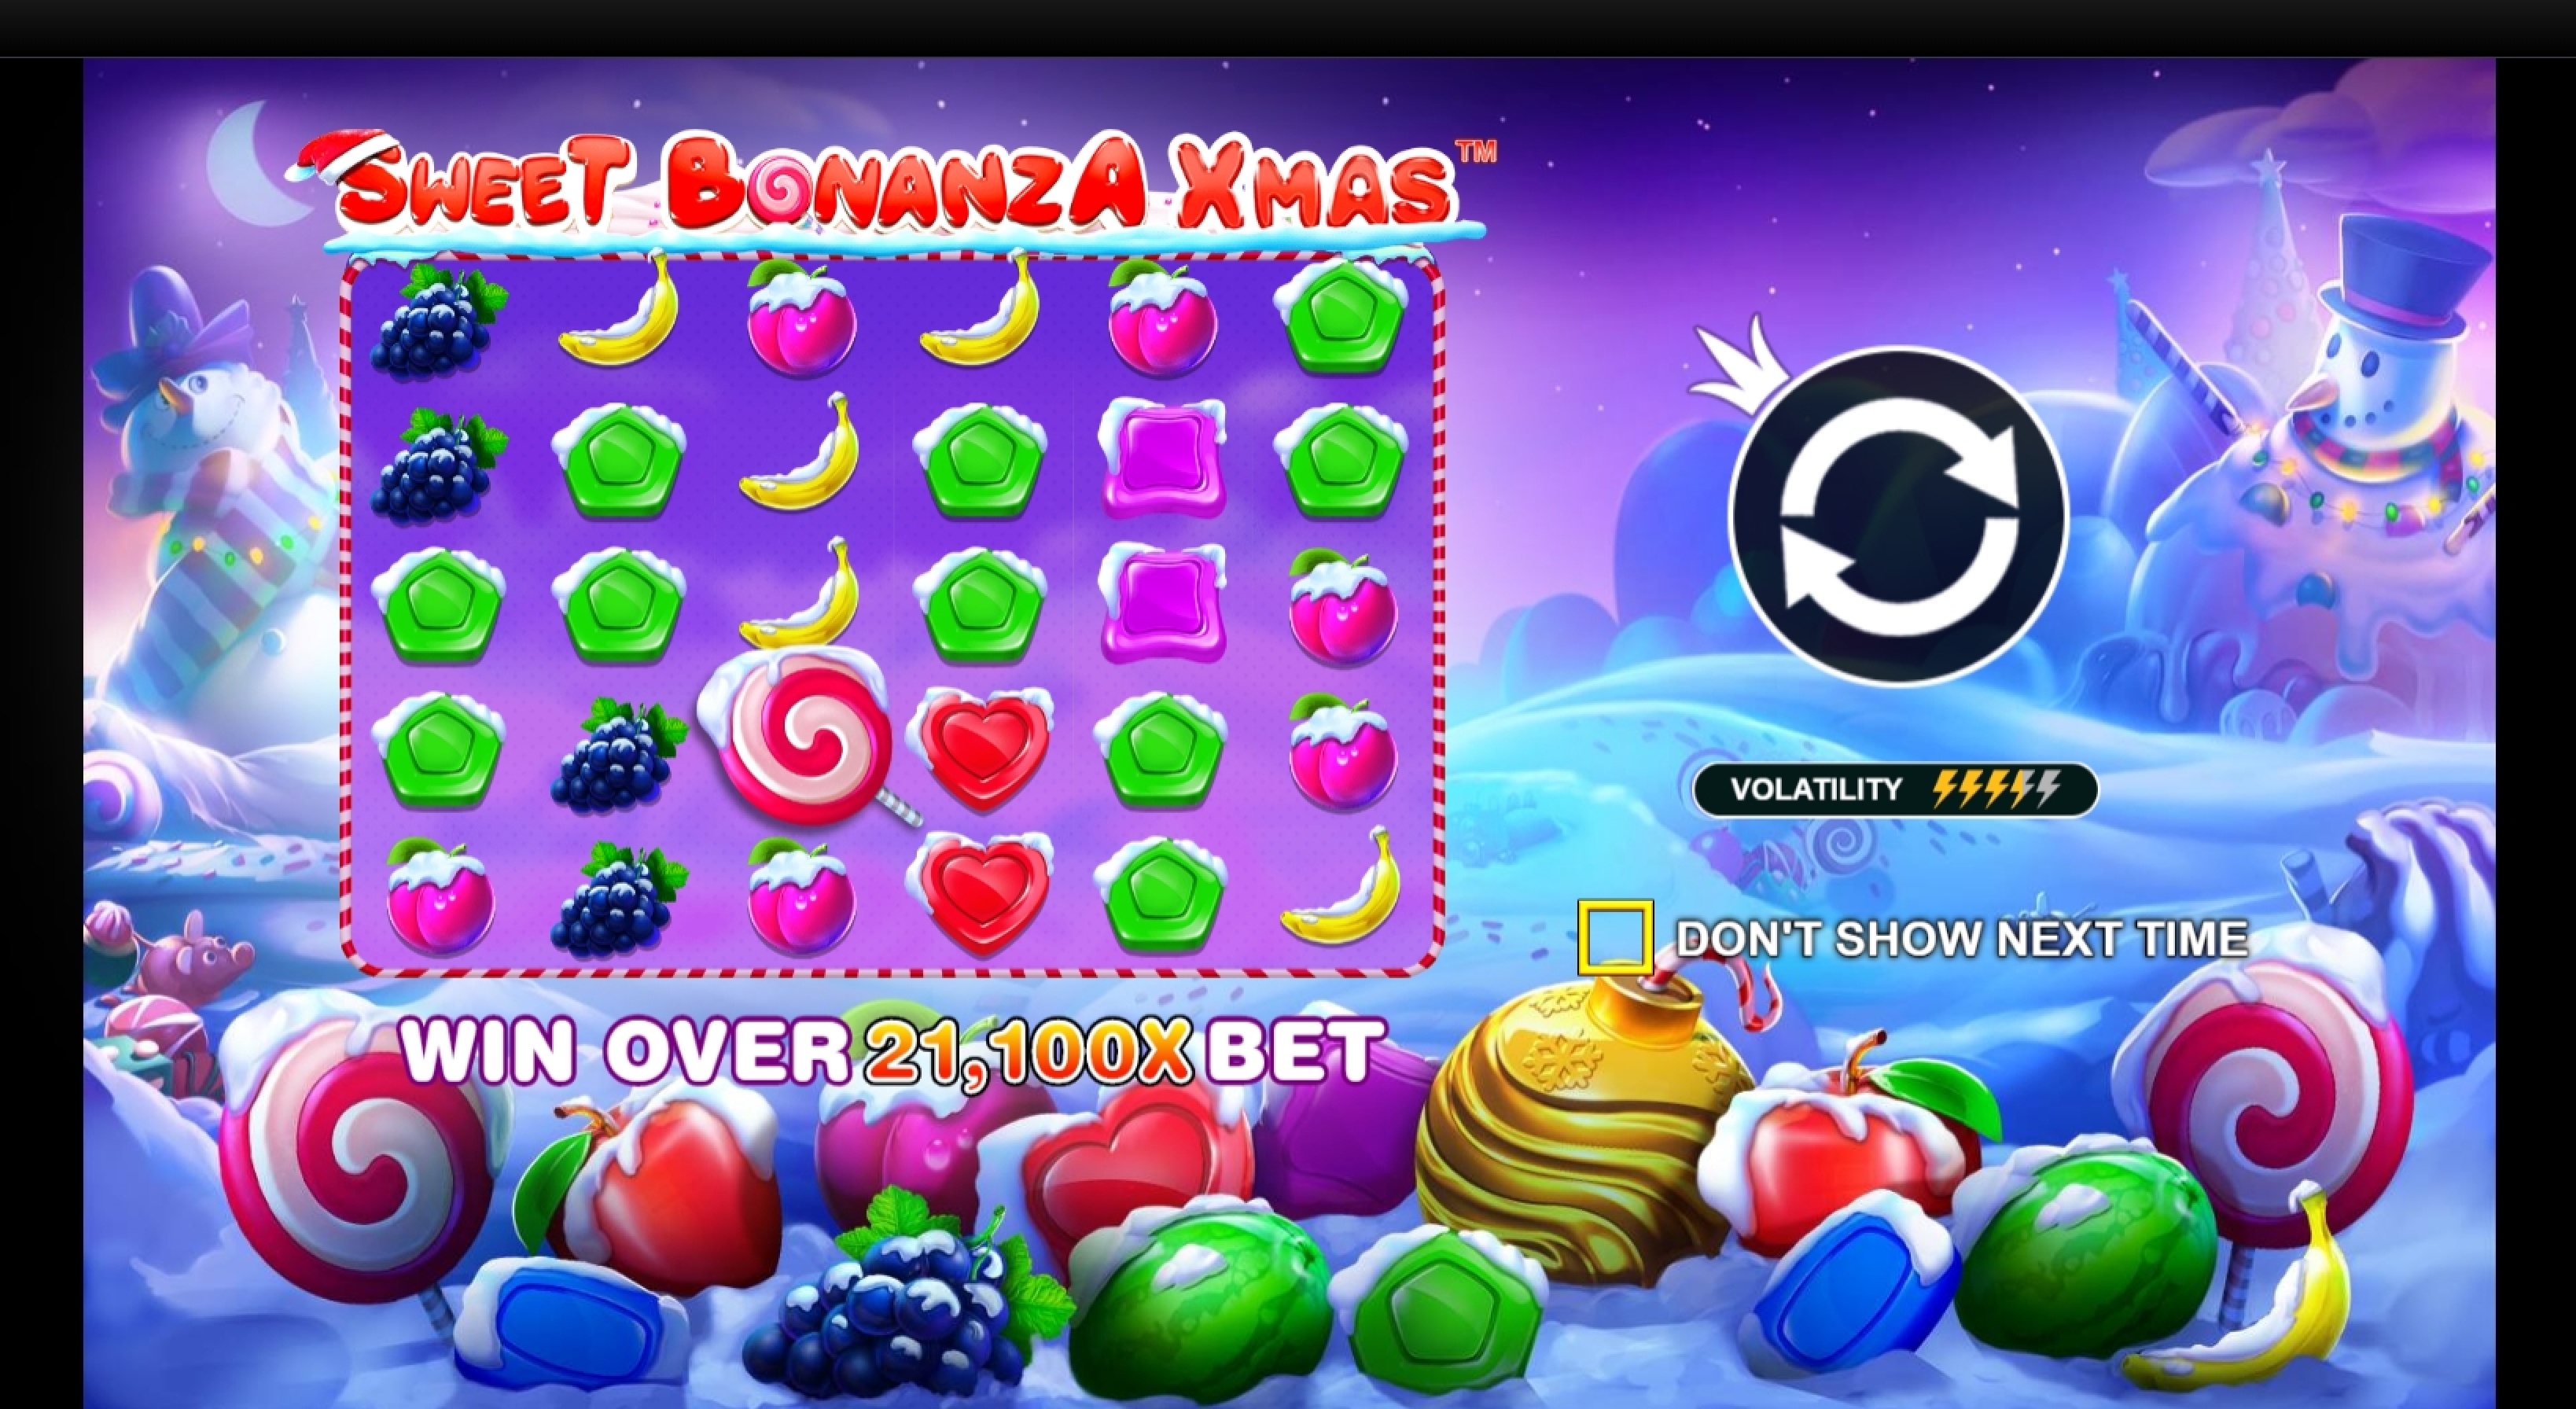 Play Sweet Bonanza Xmas Free Casino Slot Game by Pragmatic Play